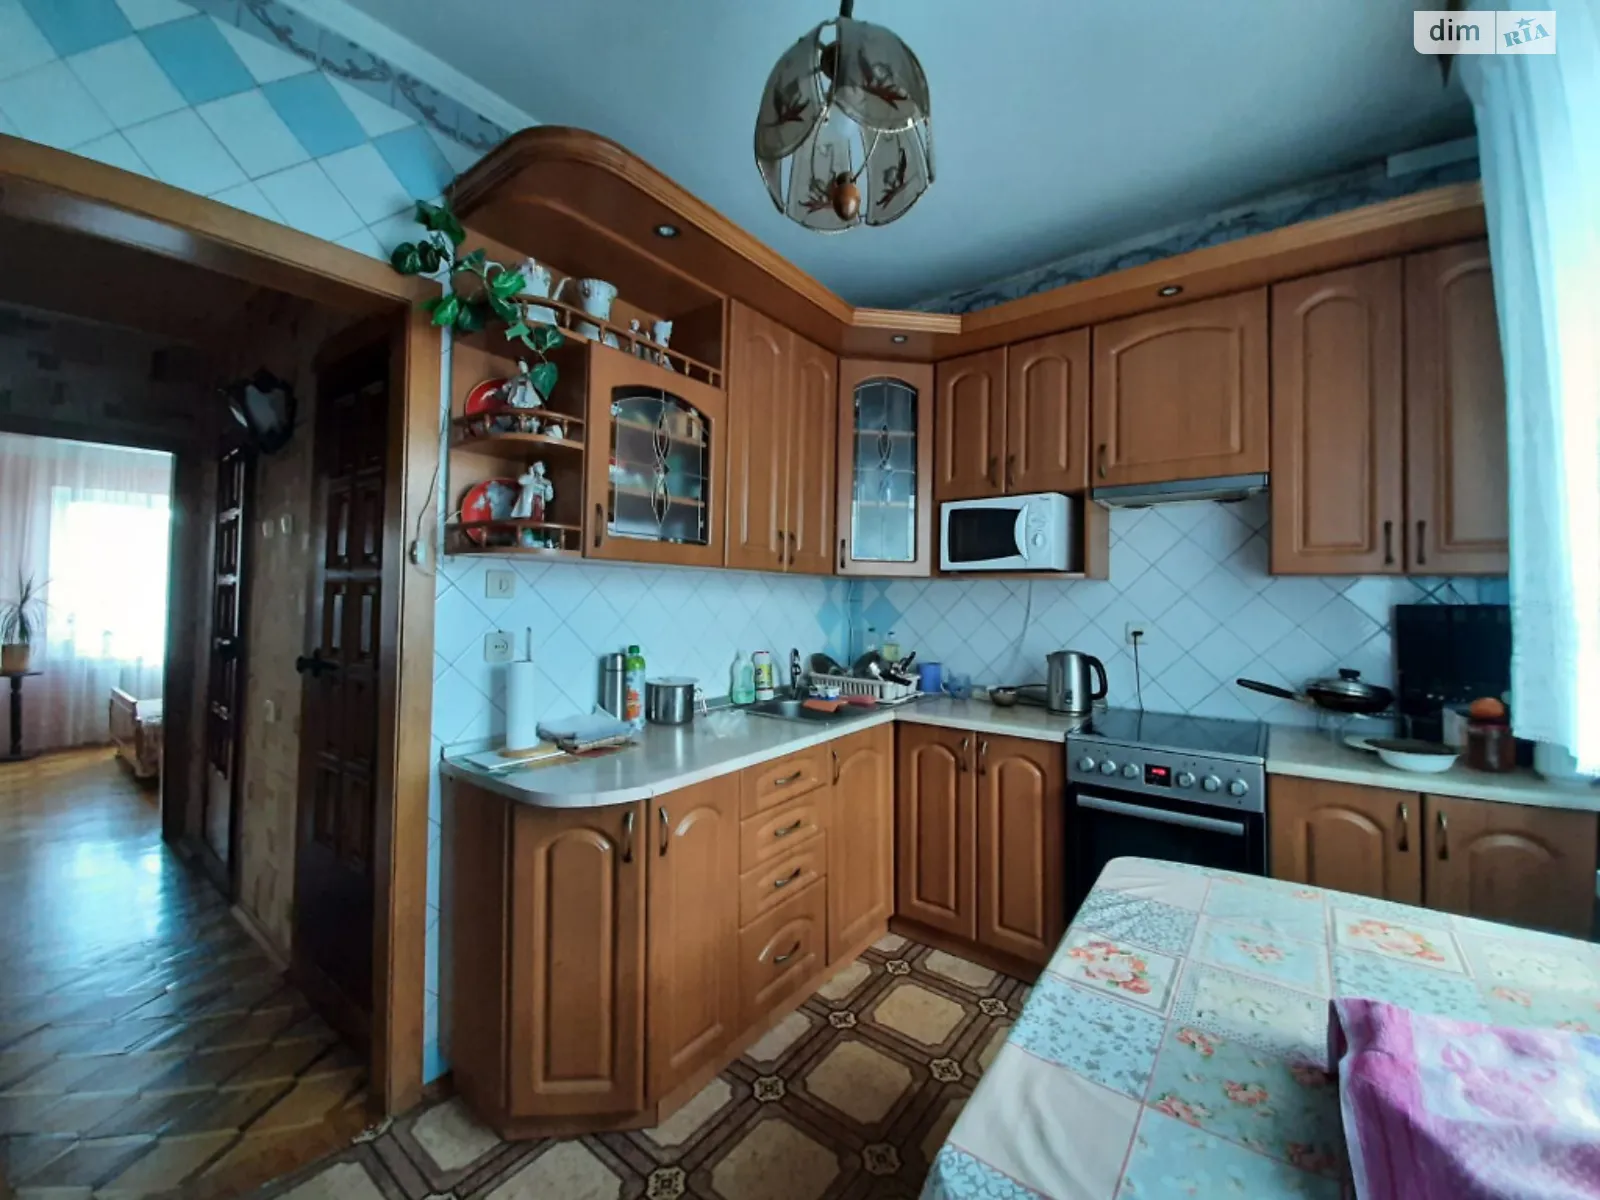 Сдается в аренду комната 88 кв. м в Киеве, цена: 3000 грн - фото 1